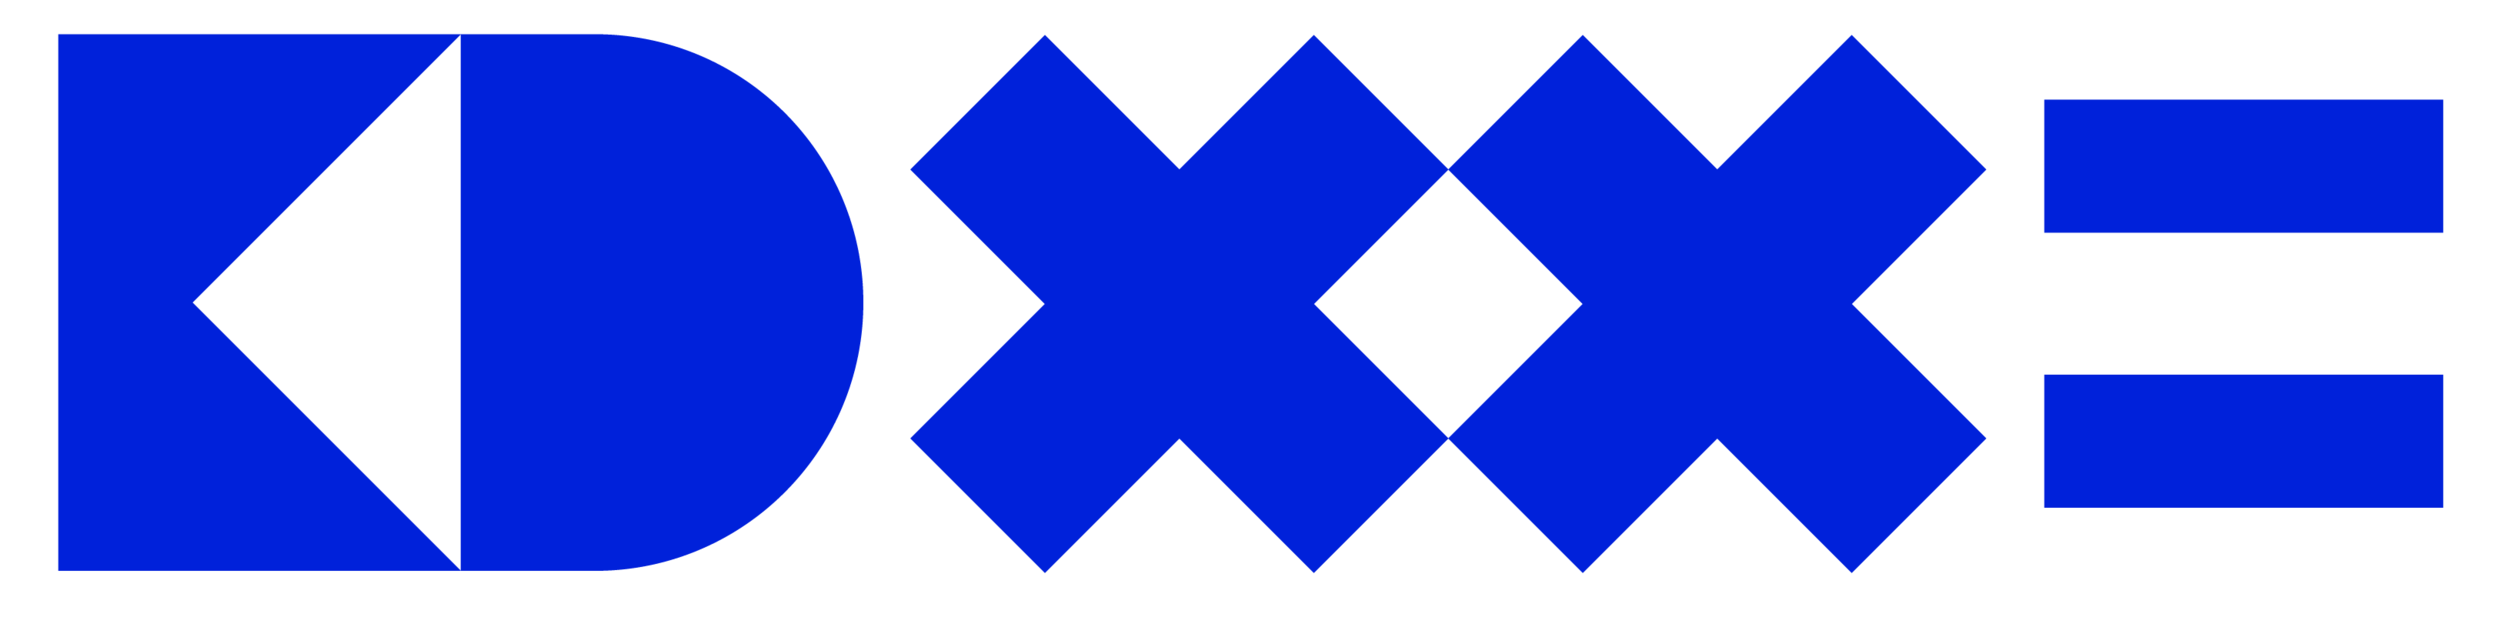 KD_Phase_02_XX= master logo (blue on white) (2).png